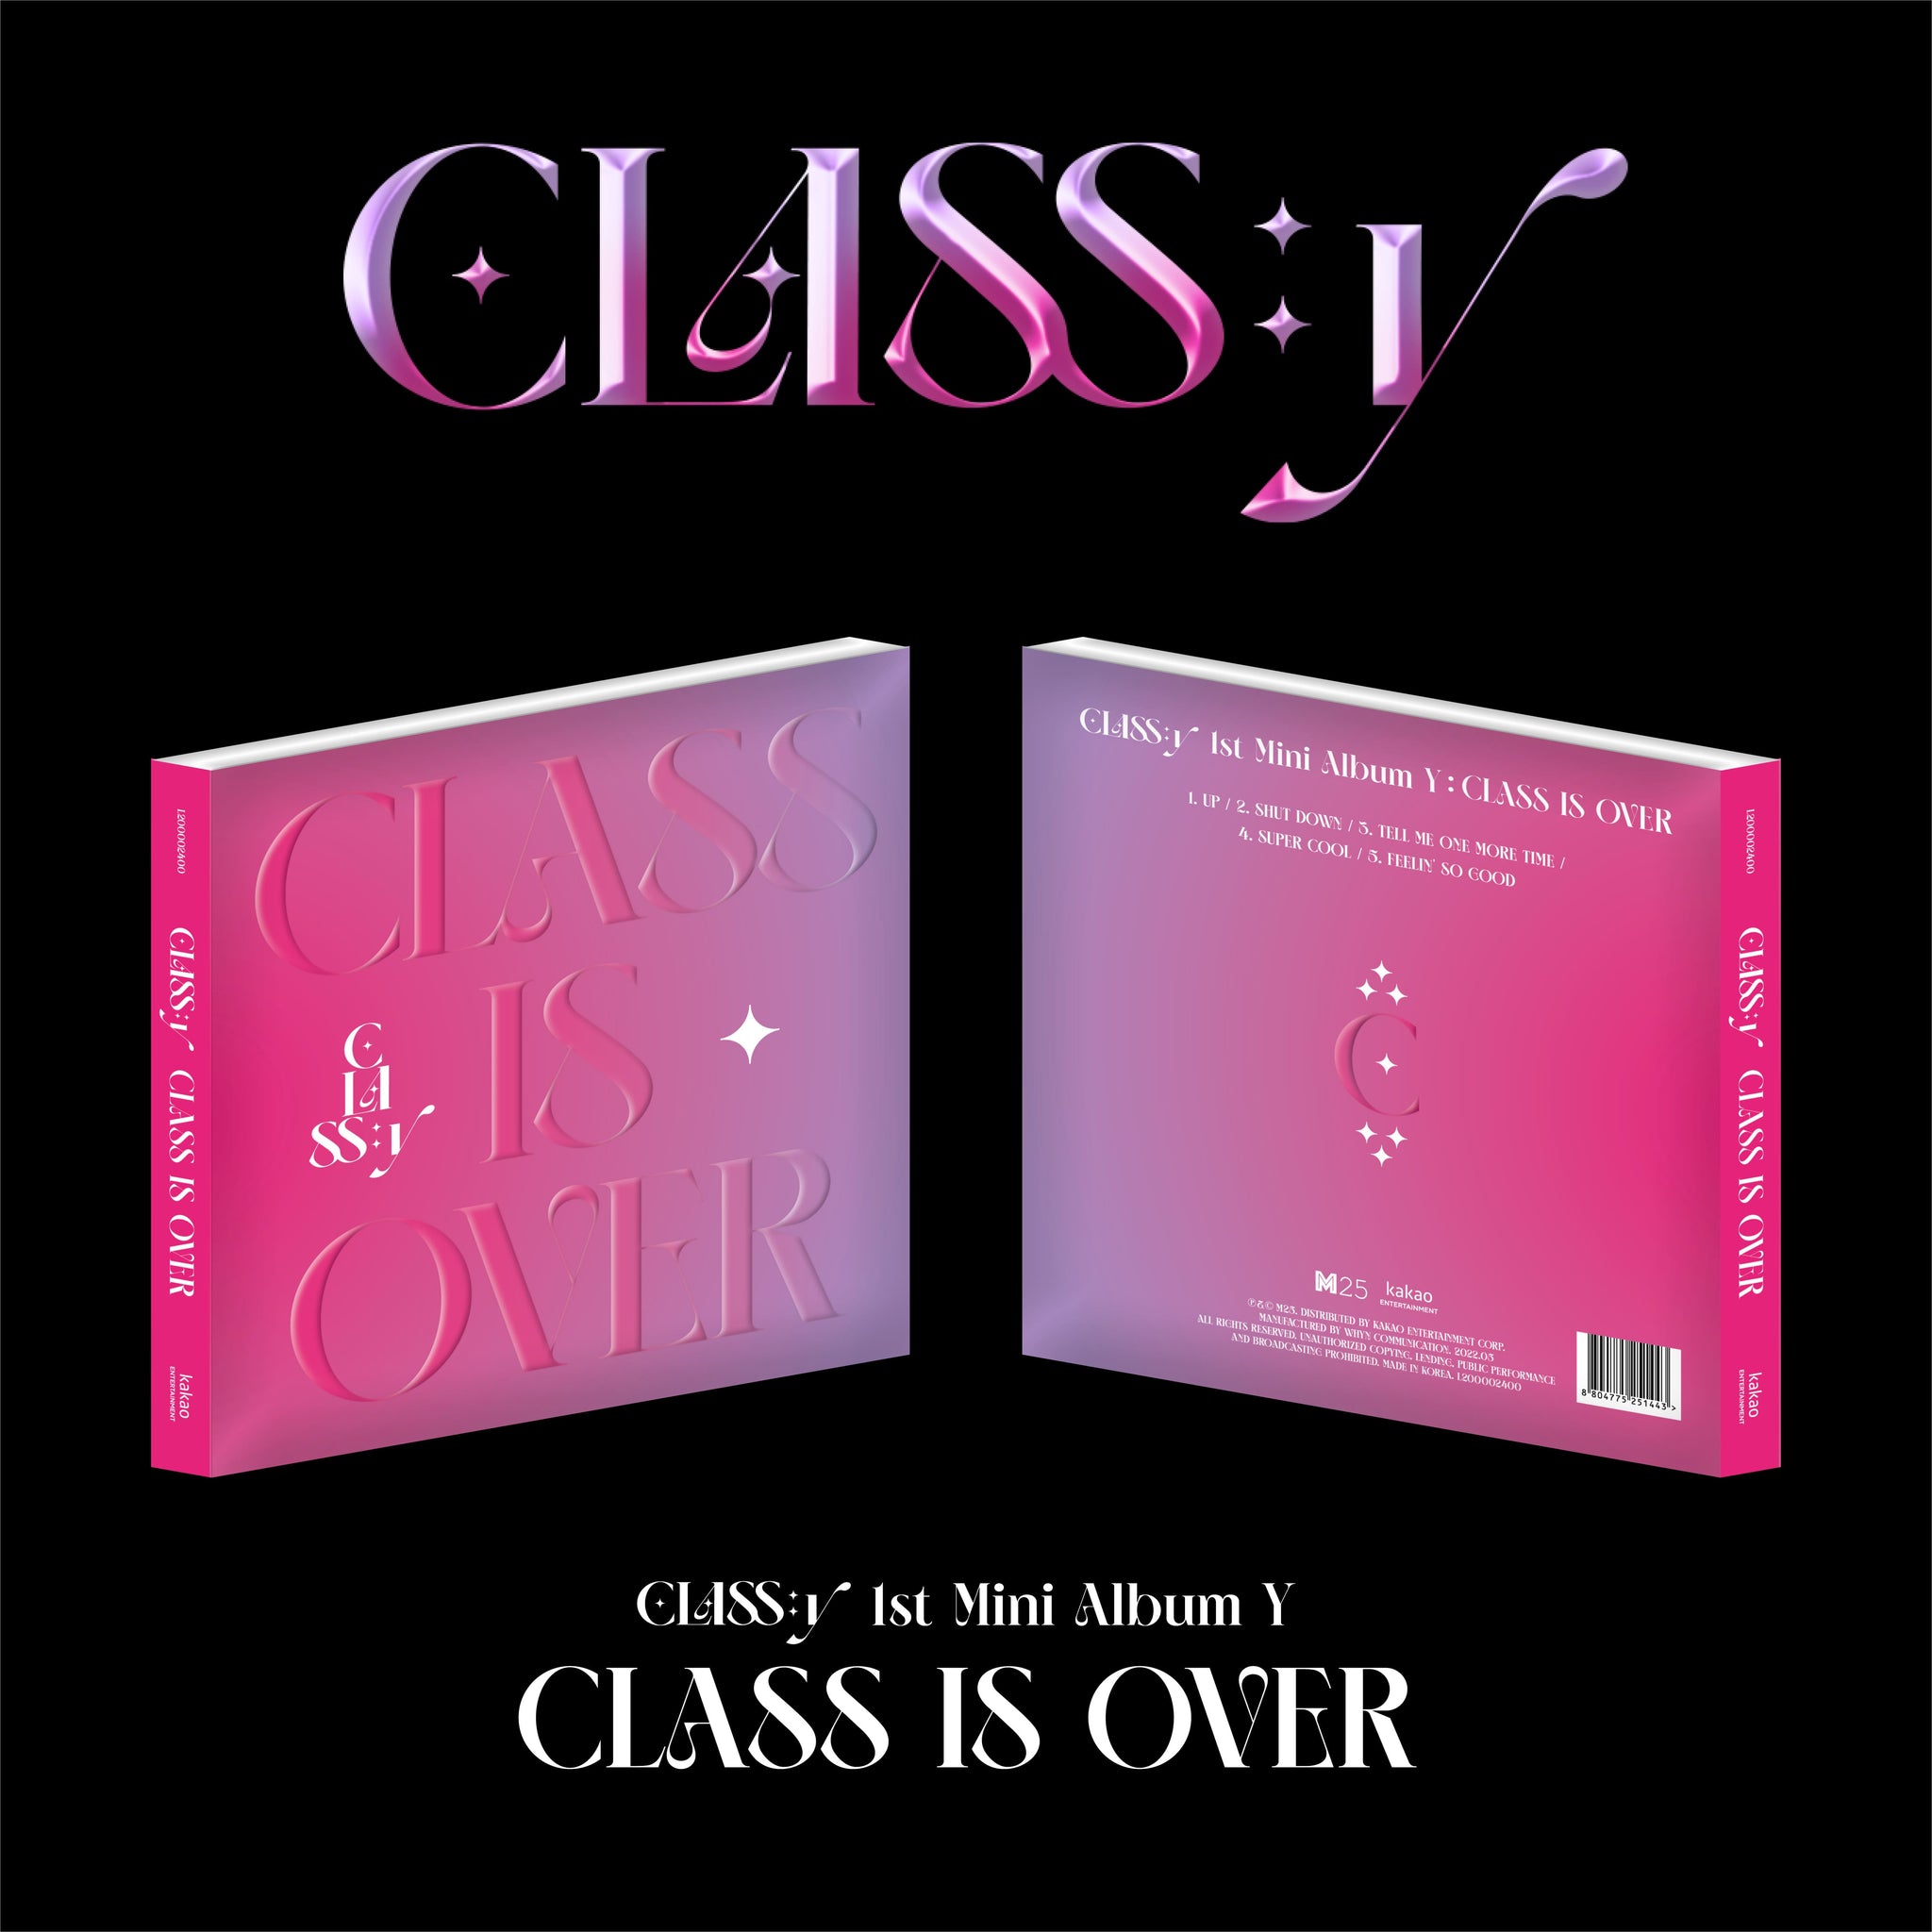 CLASS:y [CLASS IS OVER] 1st Mini Album Y